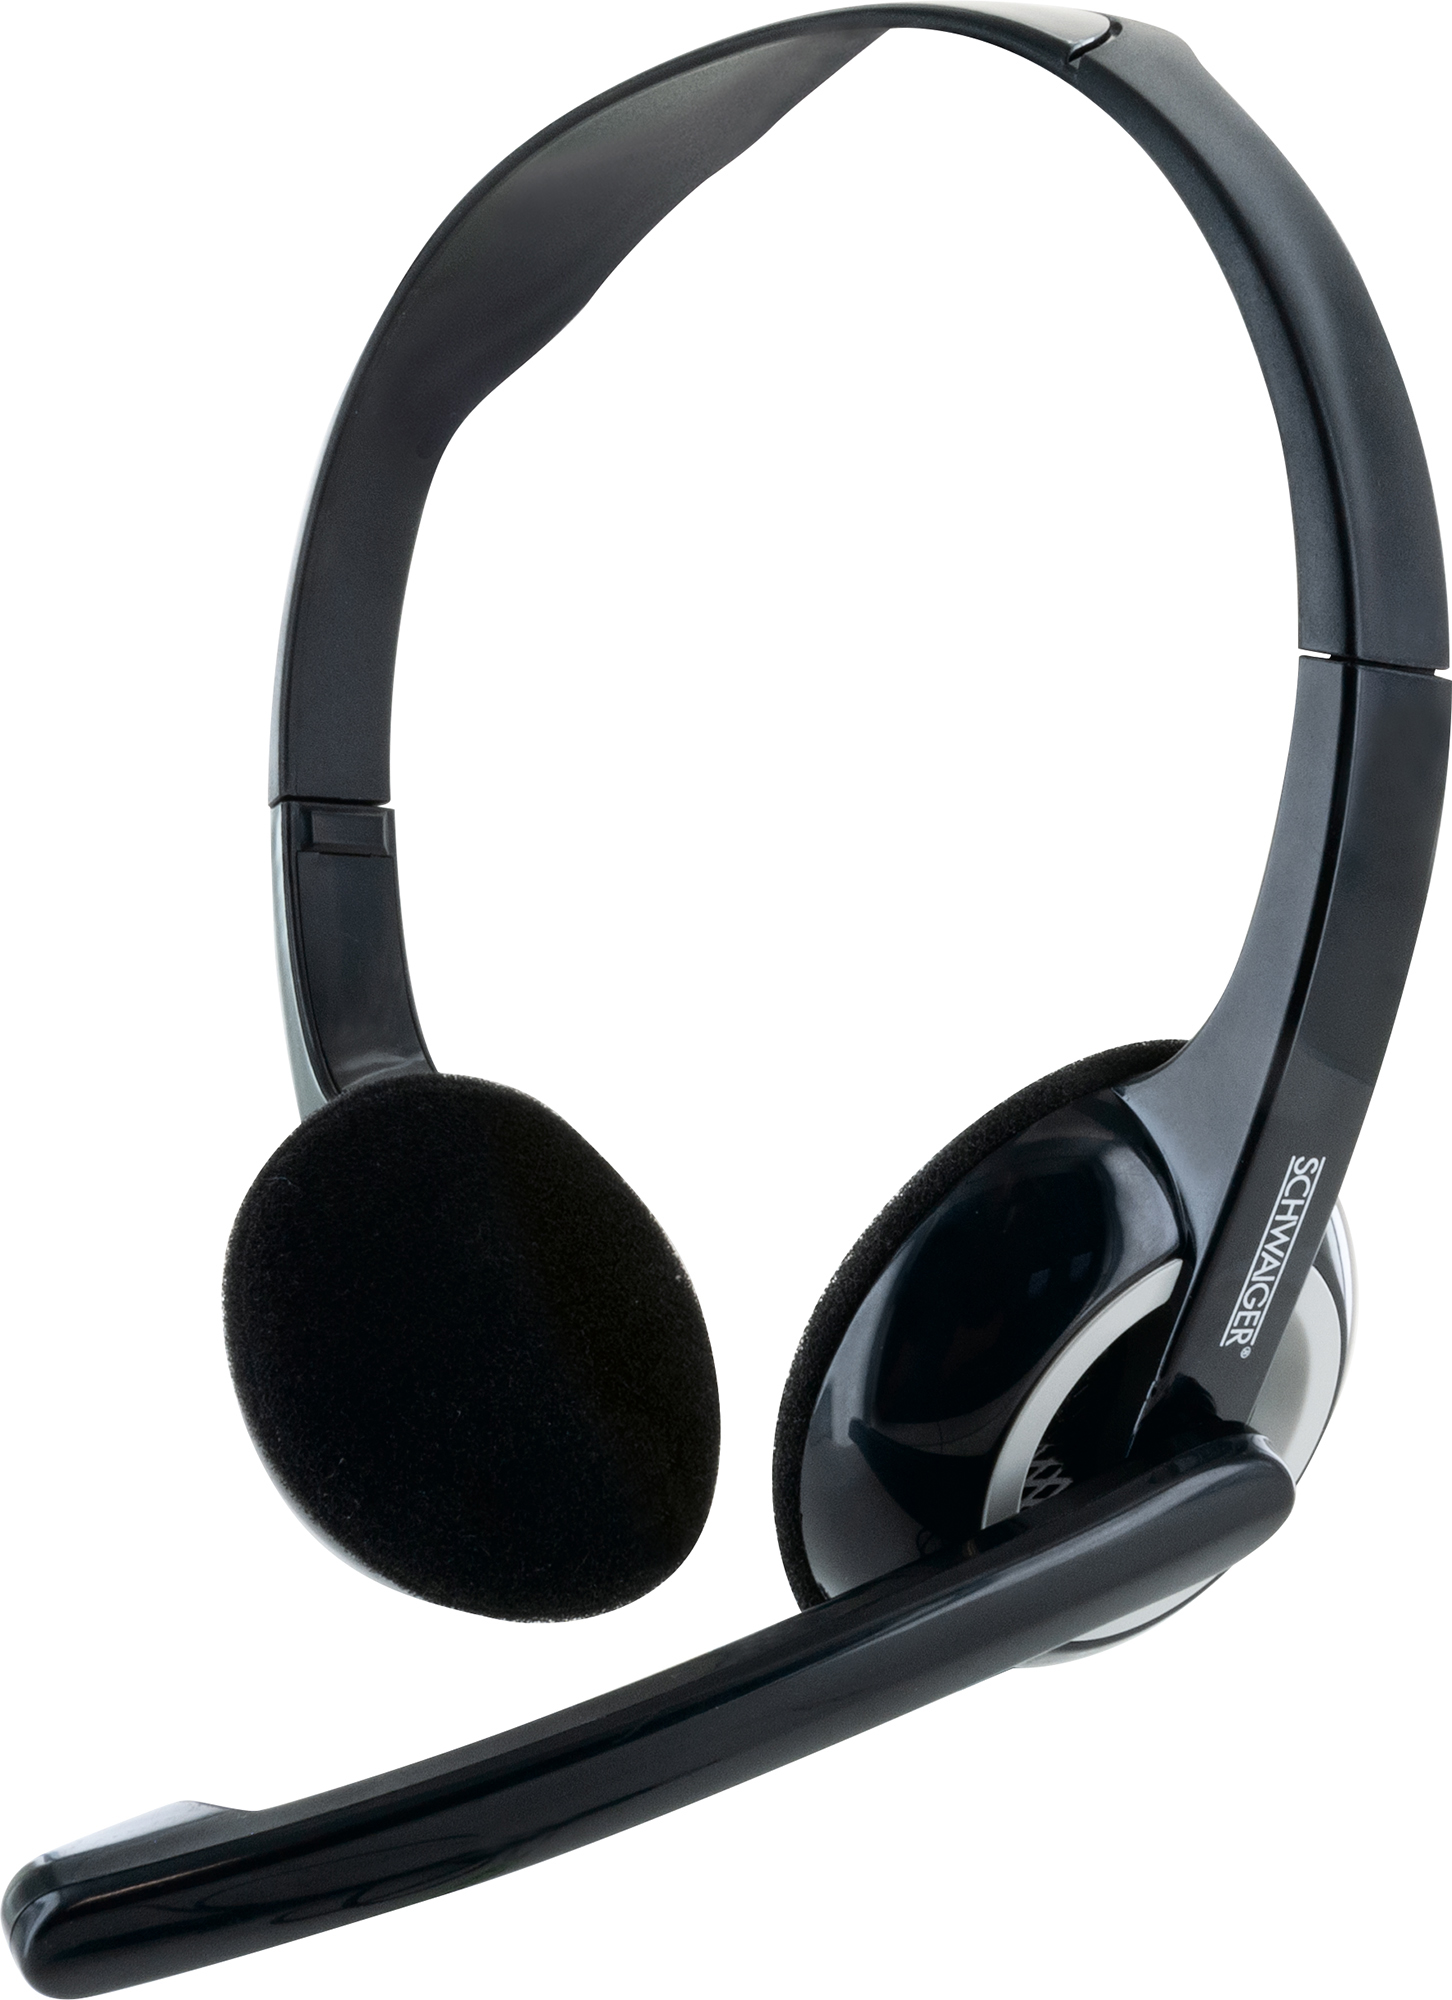 013-, schwarz -HS1000 SCHWAIGER PC Headset On-ear